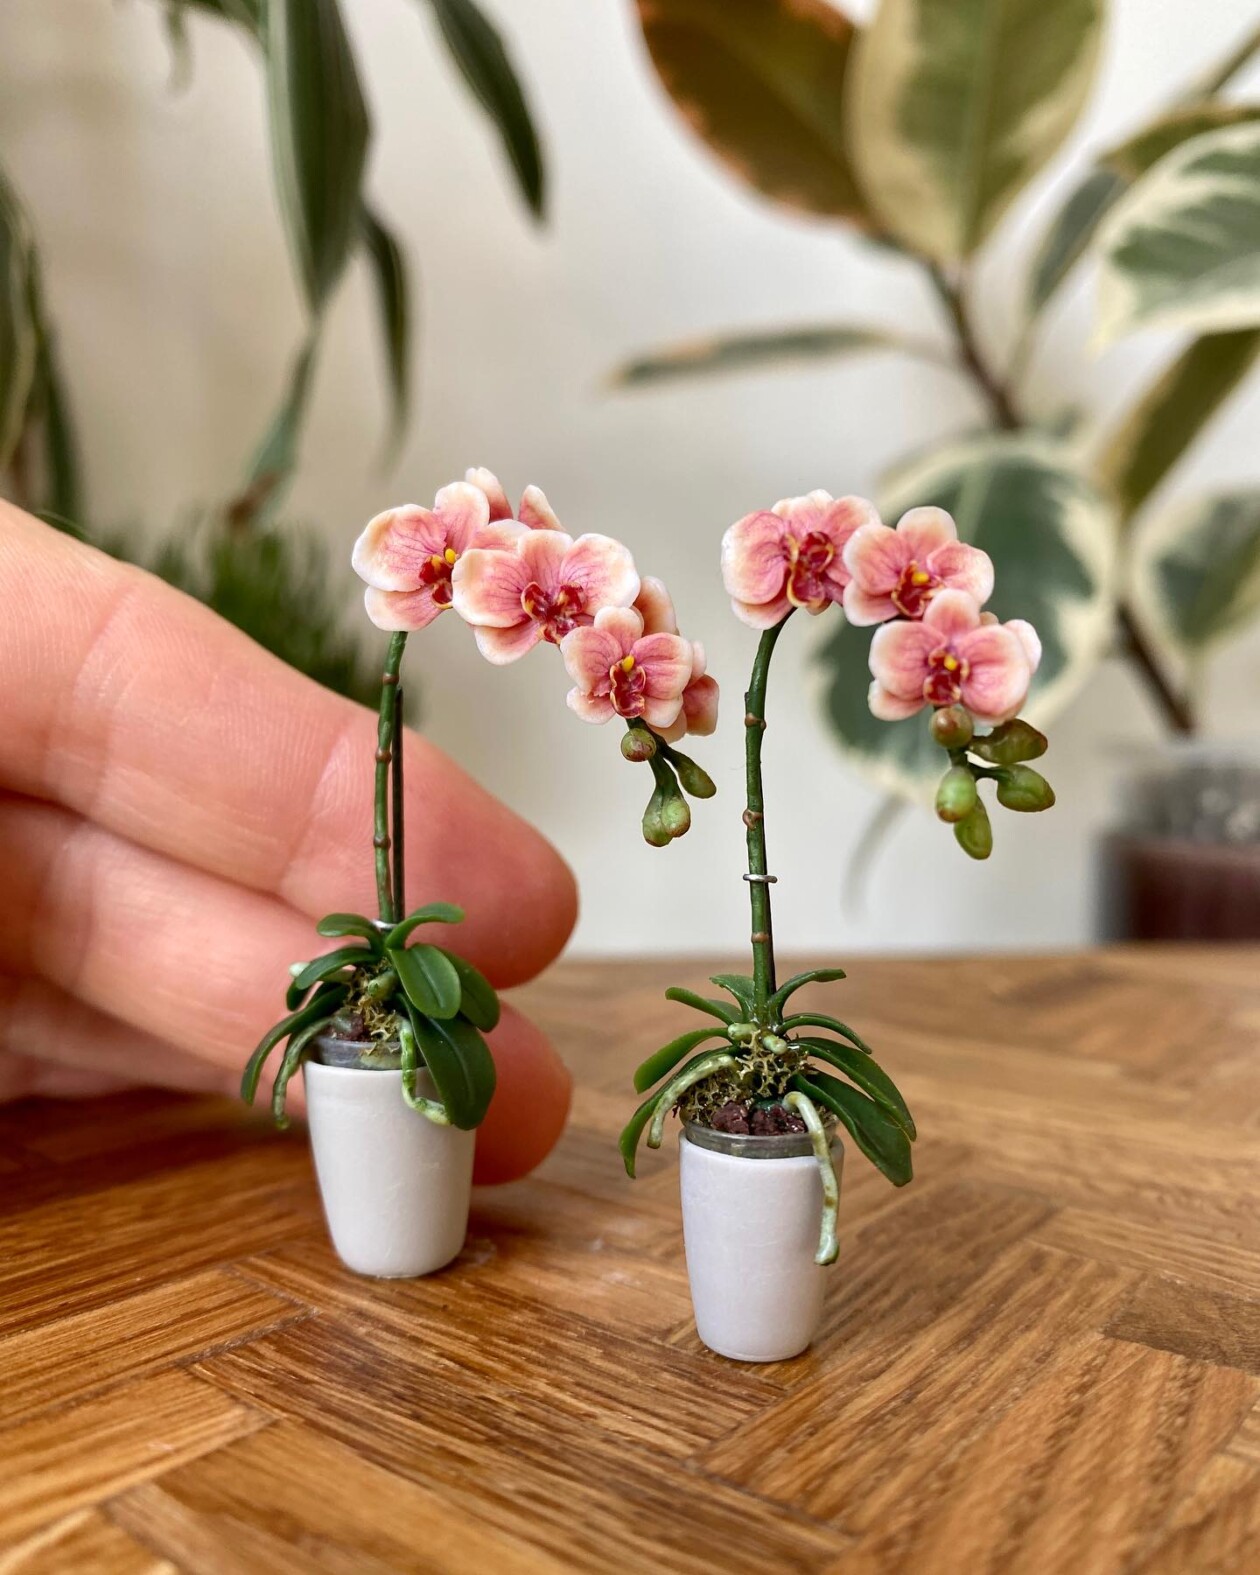 Handmade Miniature Polymer Clay Plants By Astrid Wilk (3)